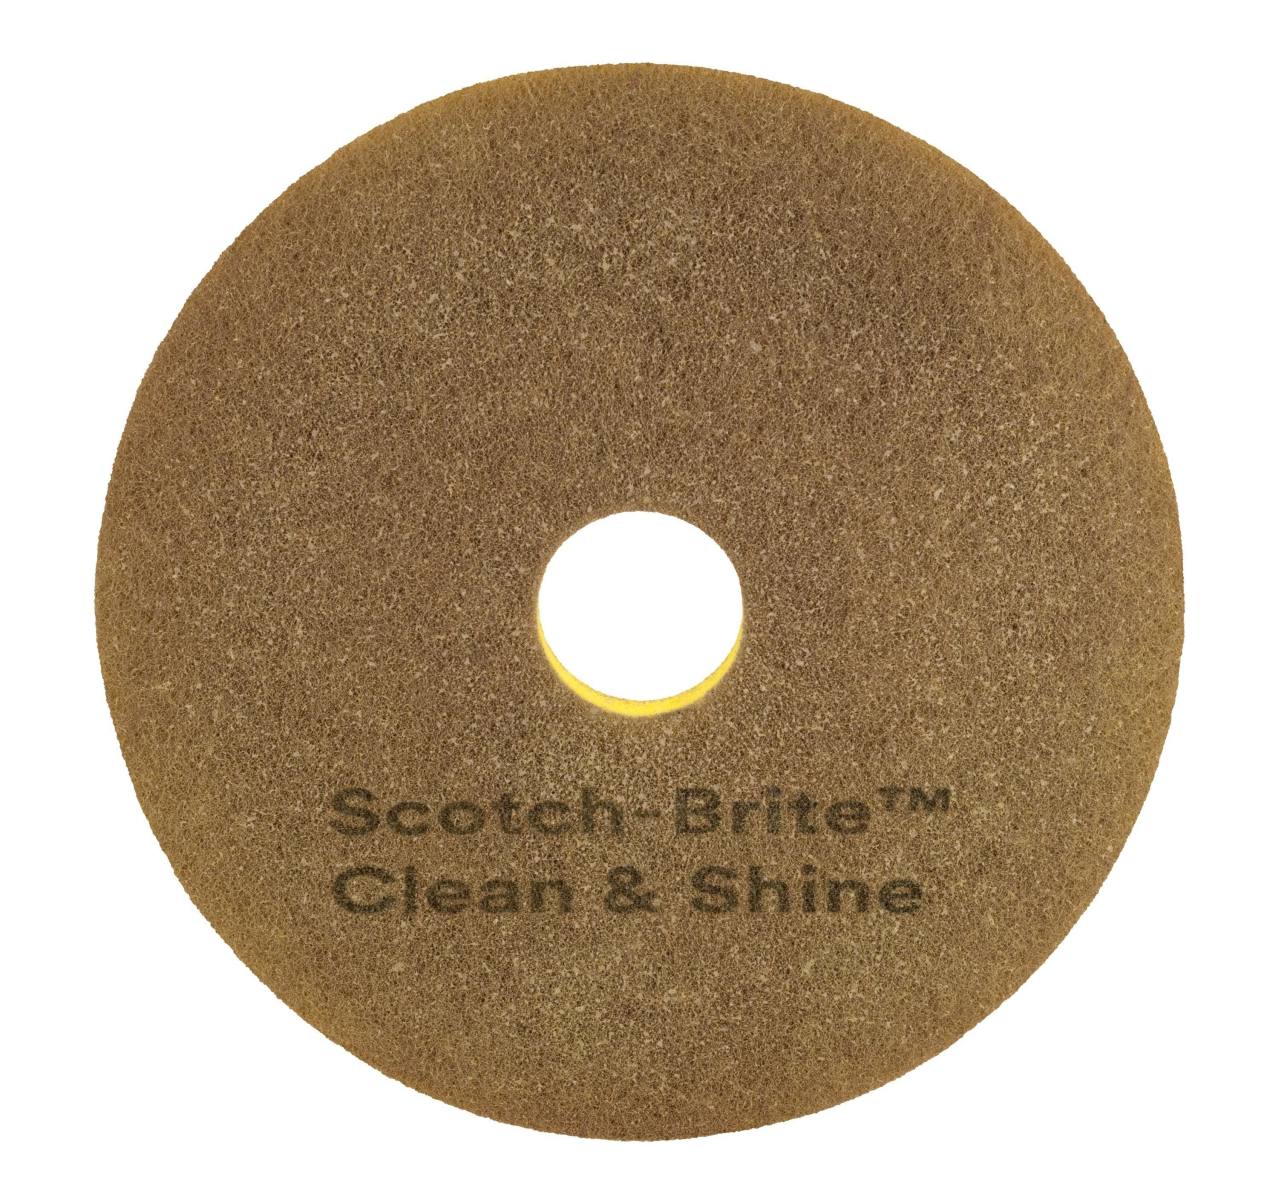 3M Scotch-Brite Clean & Shine Maschinenpad, 410 mm, 5 Stück / Karton